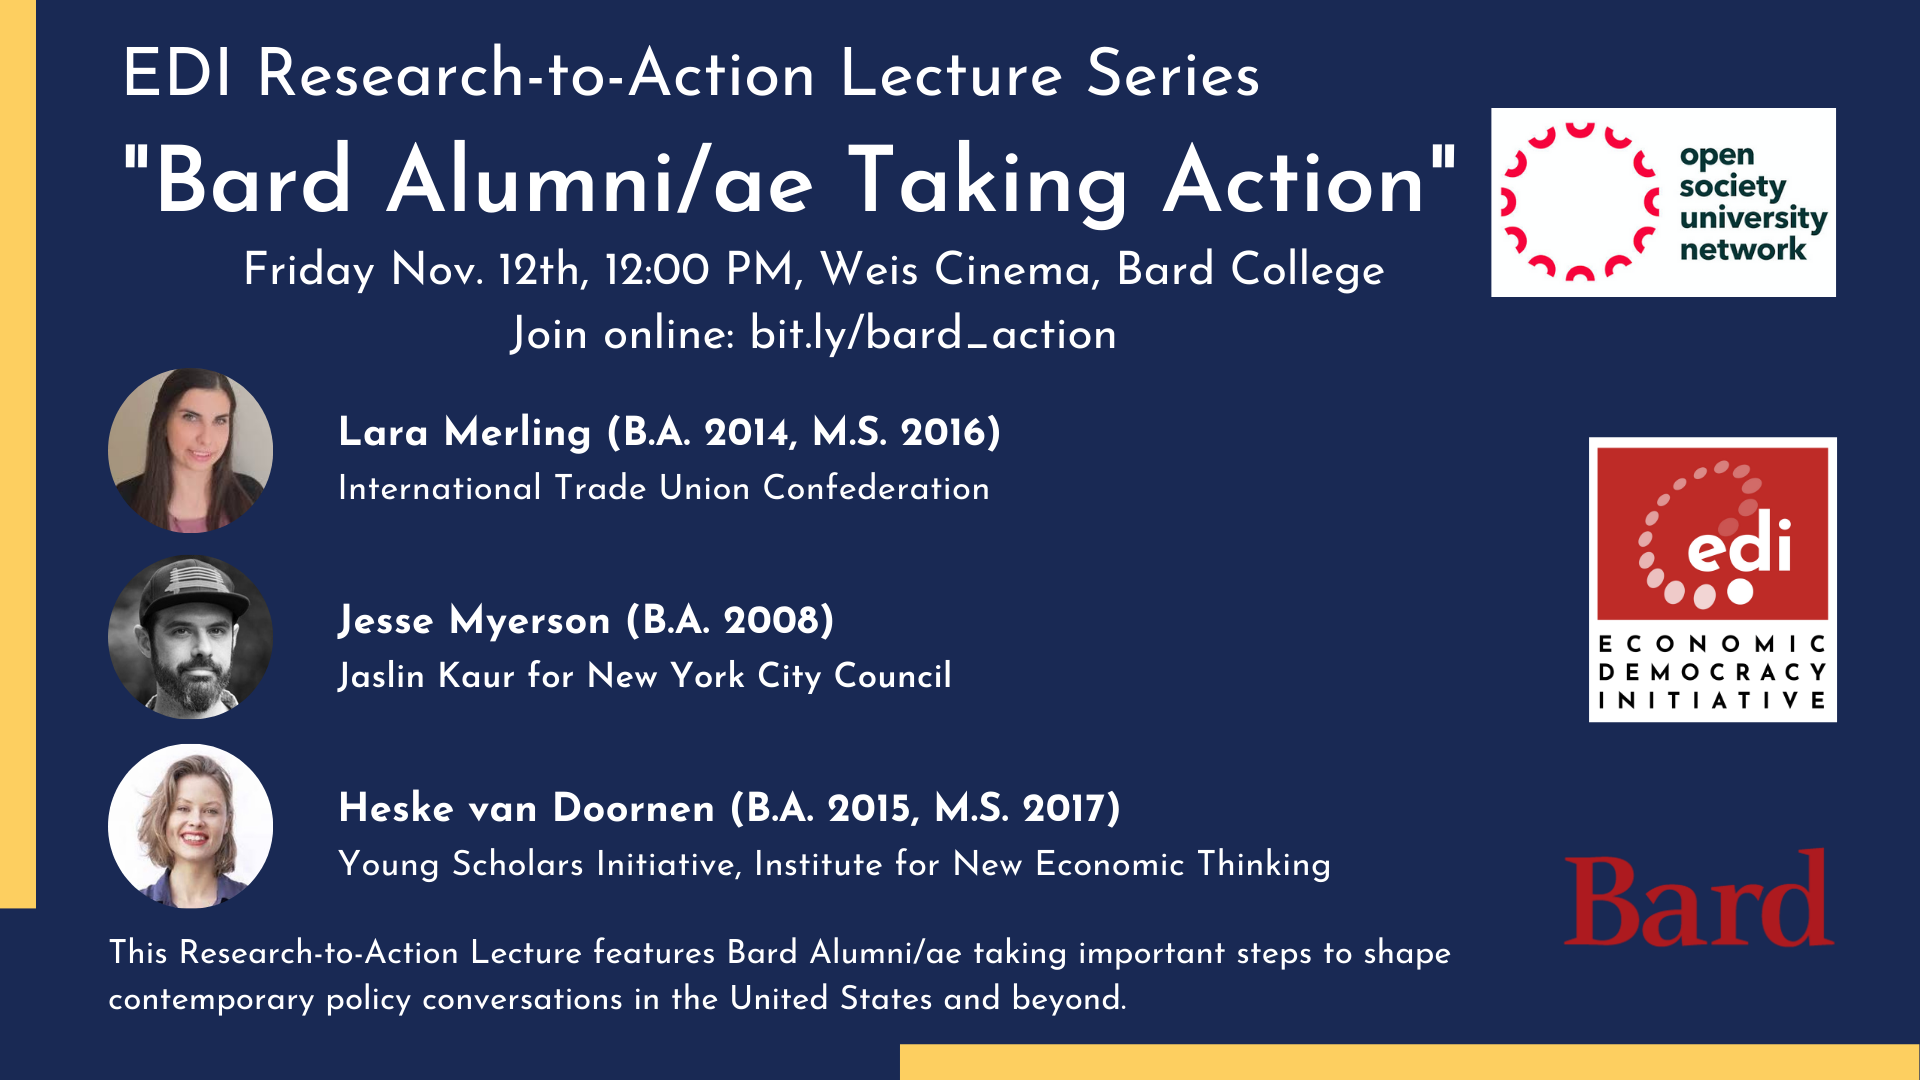 Bard Alumni/ae Taking Action